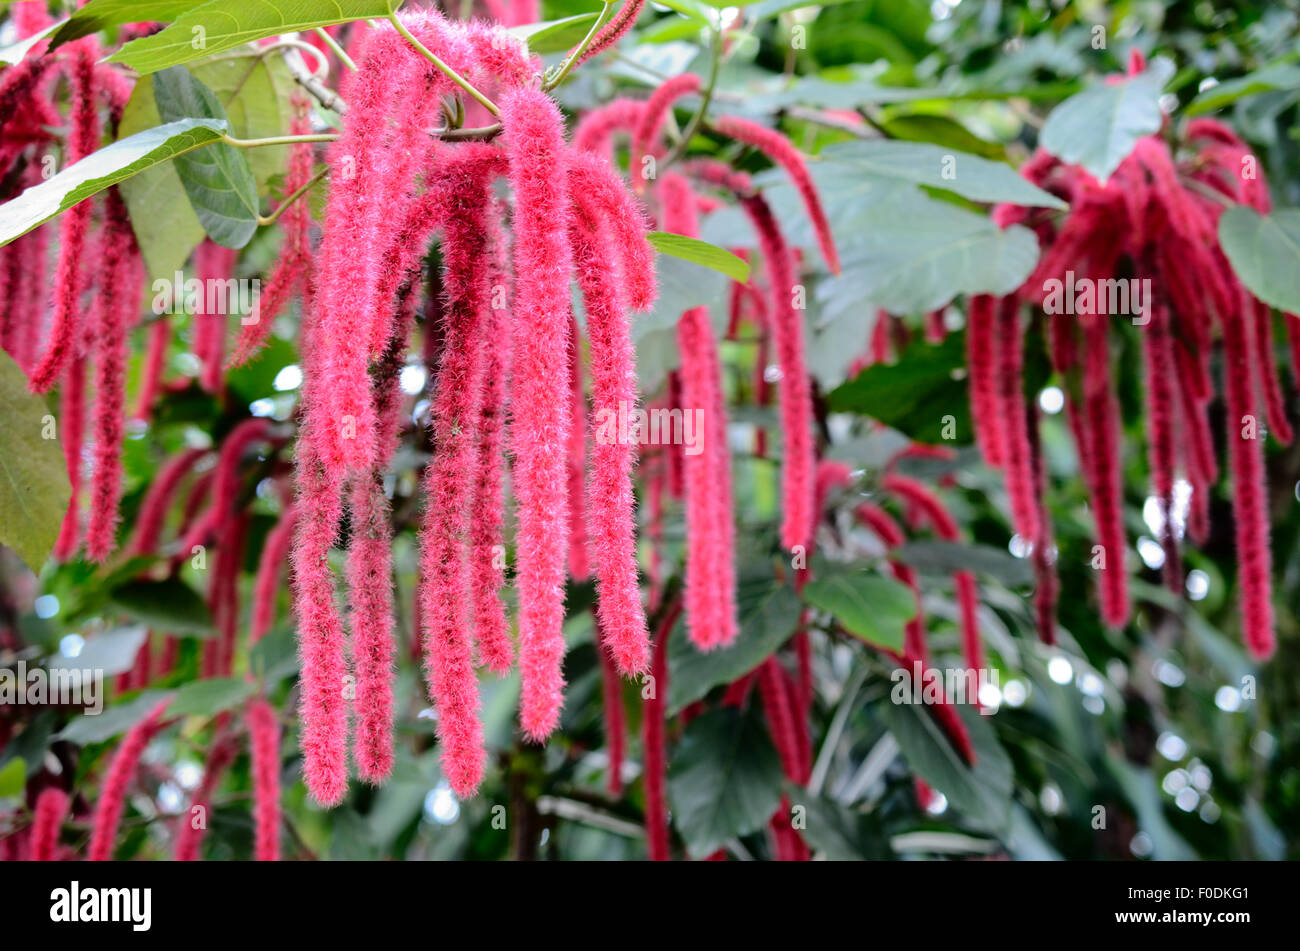 Chenille plant, flowers of Acalypha hispida, horizontal photo Stock Photo